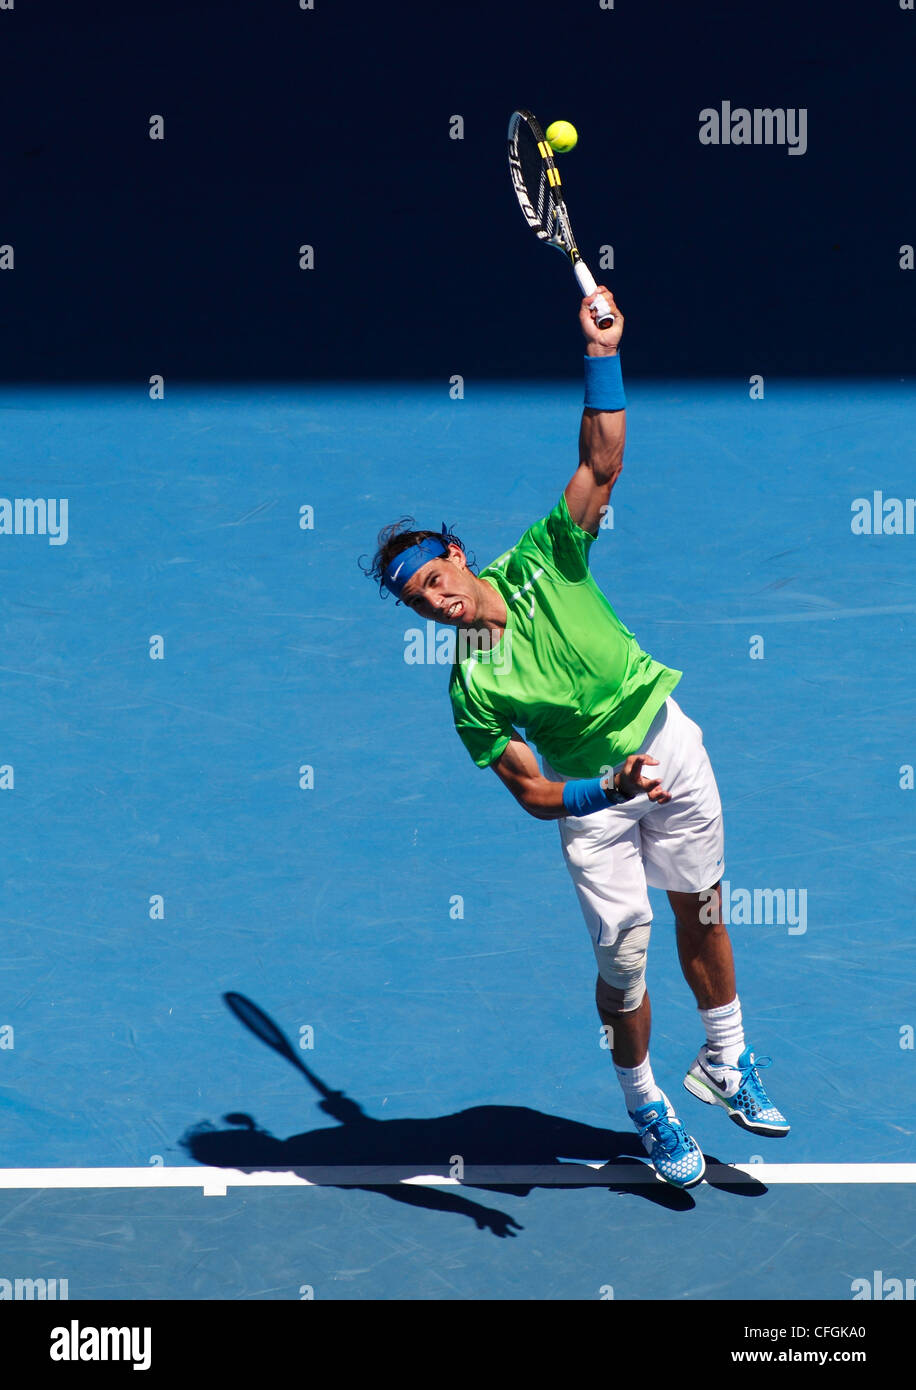 Rafael Nadal (ESP) at the Australian Open 2012, ITF Grand Slam Tennis Tournament, Melbourne Park,Australia. Stock Photo